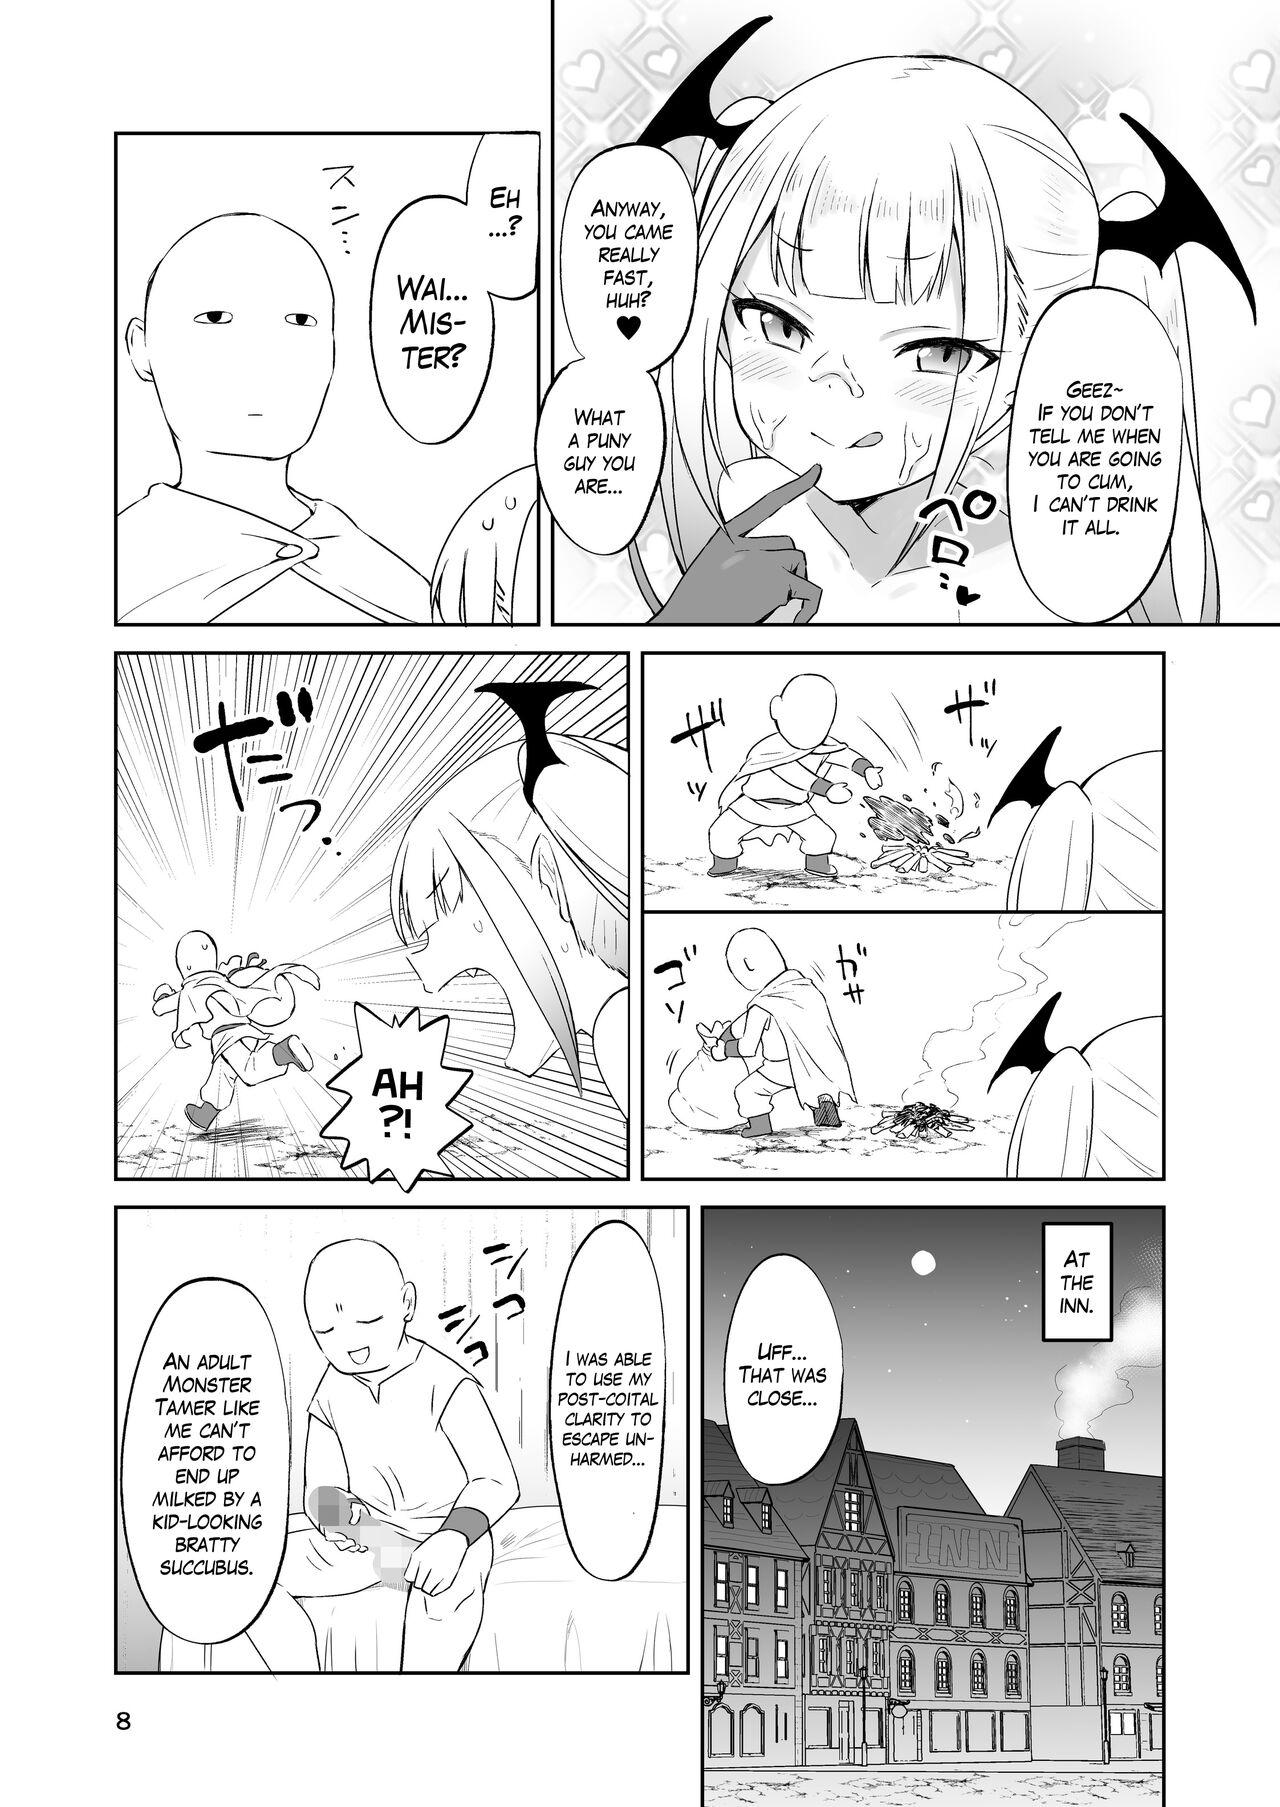 Hot Mom MSGK Succubus ga Nakama ni Shite Hoshisou ni Kochira o Miteiru - The MSGK succubus is looking at you as if she wants to be your mate. - Original Top - Page 8